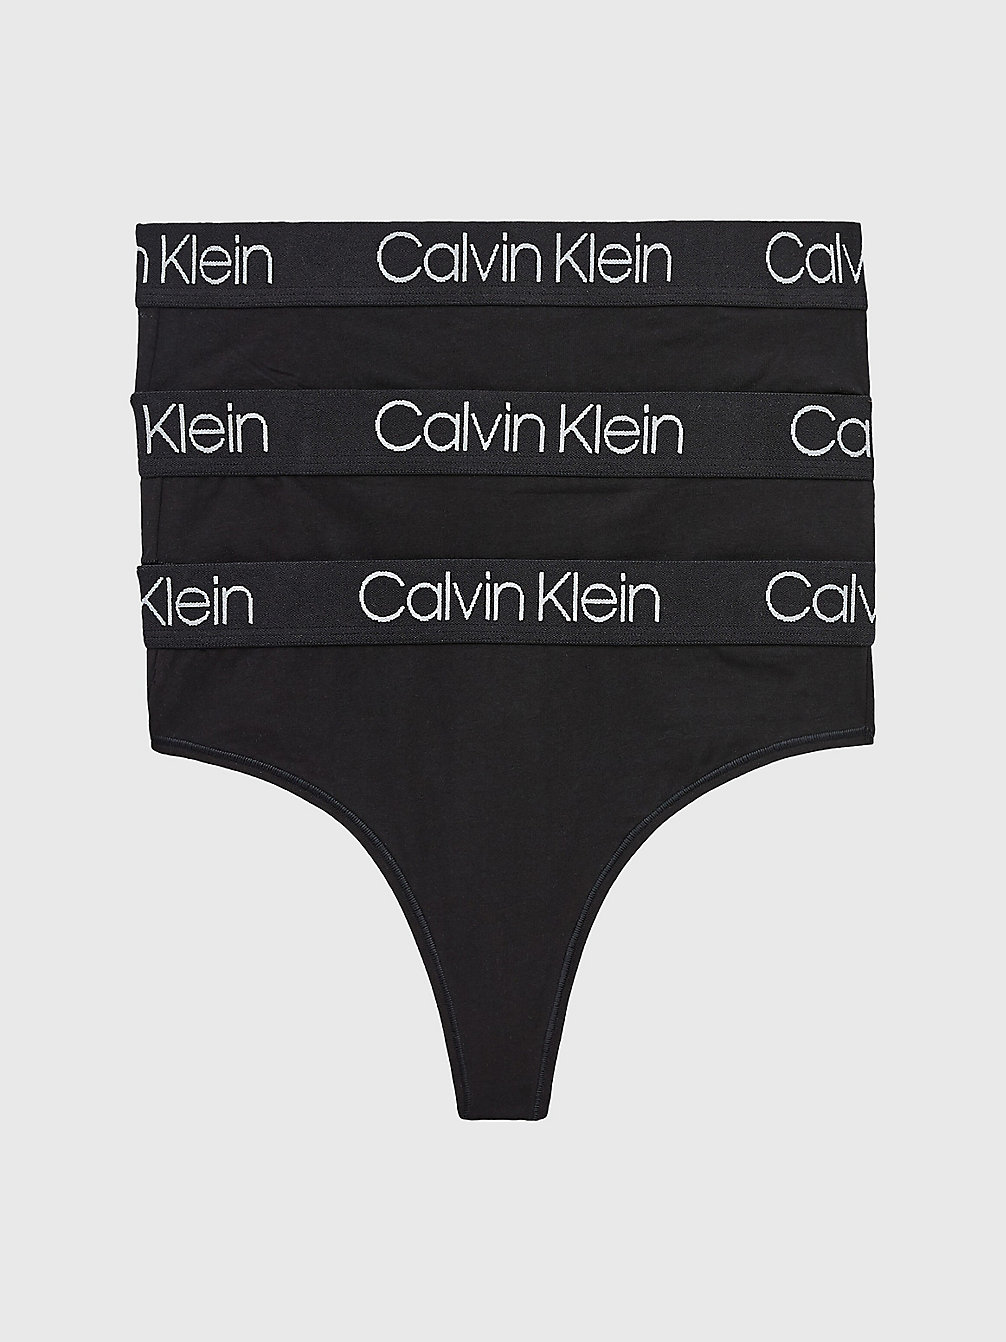 BLACK/BLACK/BLACK Lot De 3 Strings Taille Haute - Body undefined femmes Calvin Klein